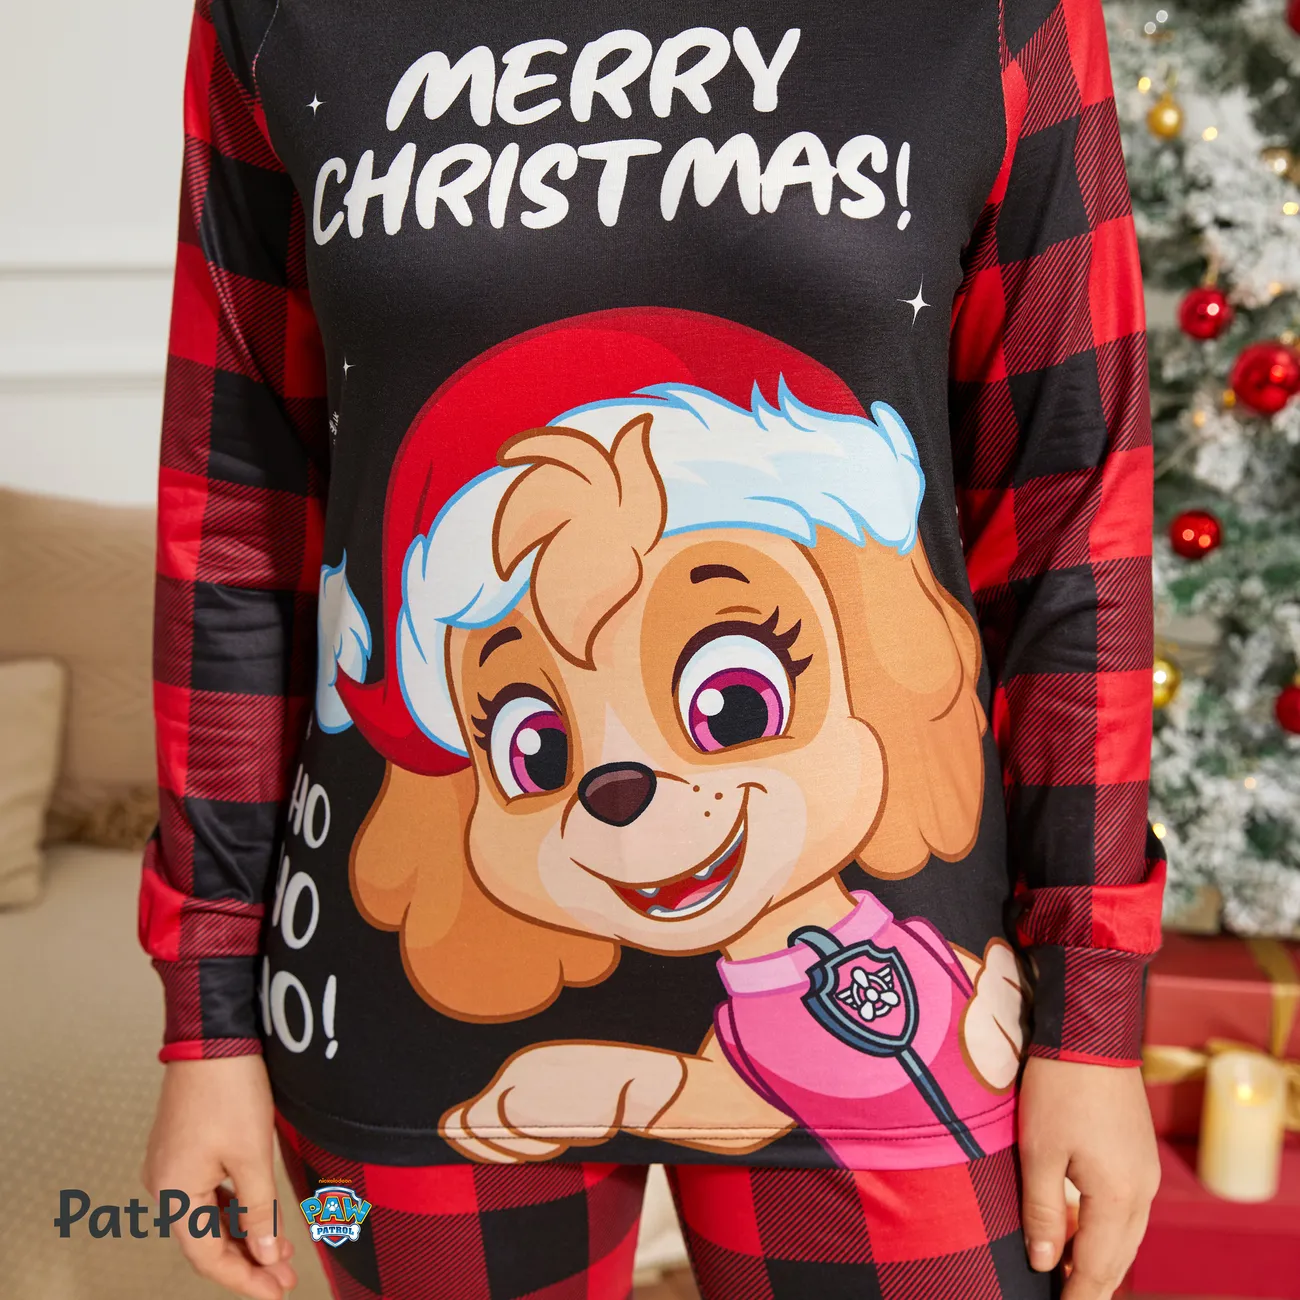 PAW Patrol Family Matching Christmas Red Plaid Long-sleeve Cartoon Graphic Pajamas Sets (Flame Resistant) redblack big image 1